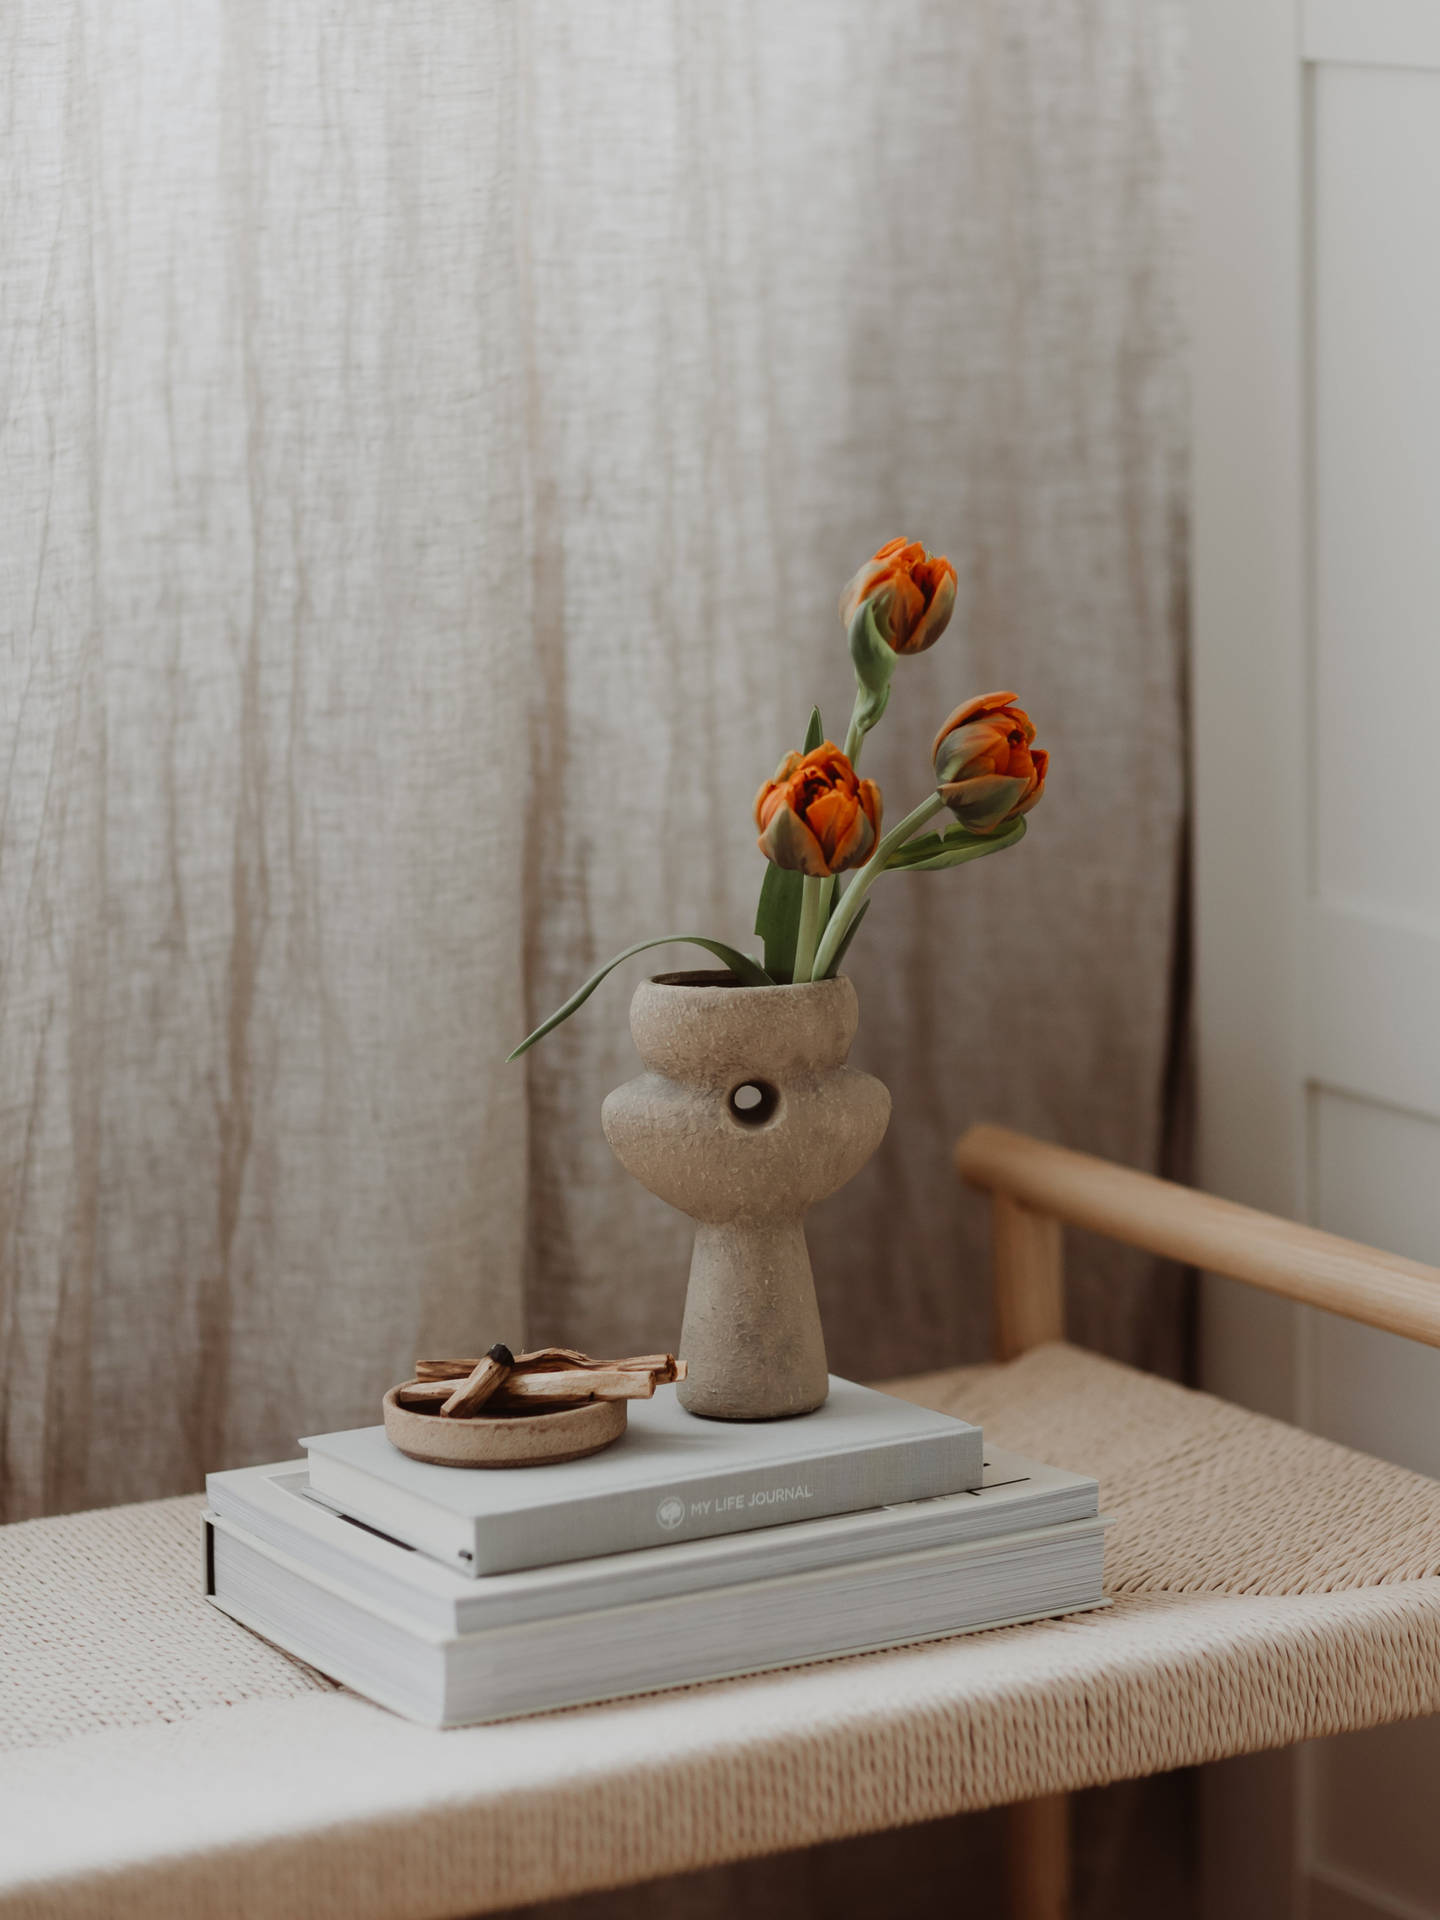 Journals And Flower Vase Wallpaper